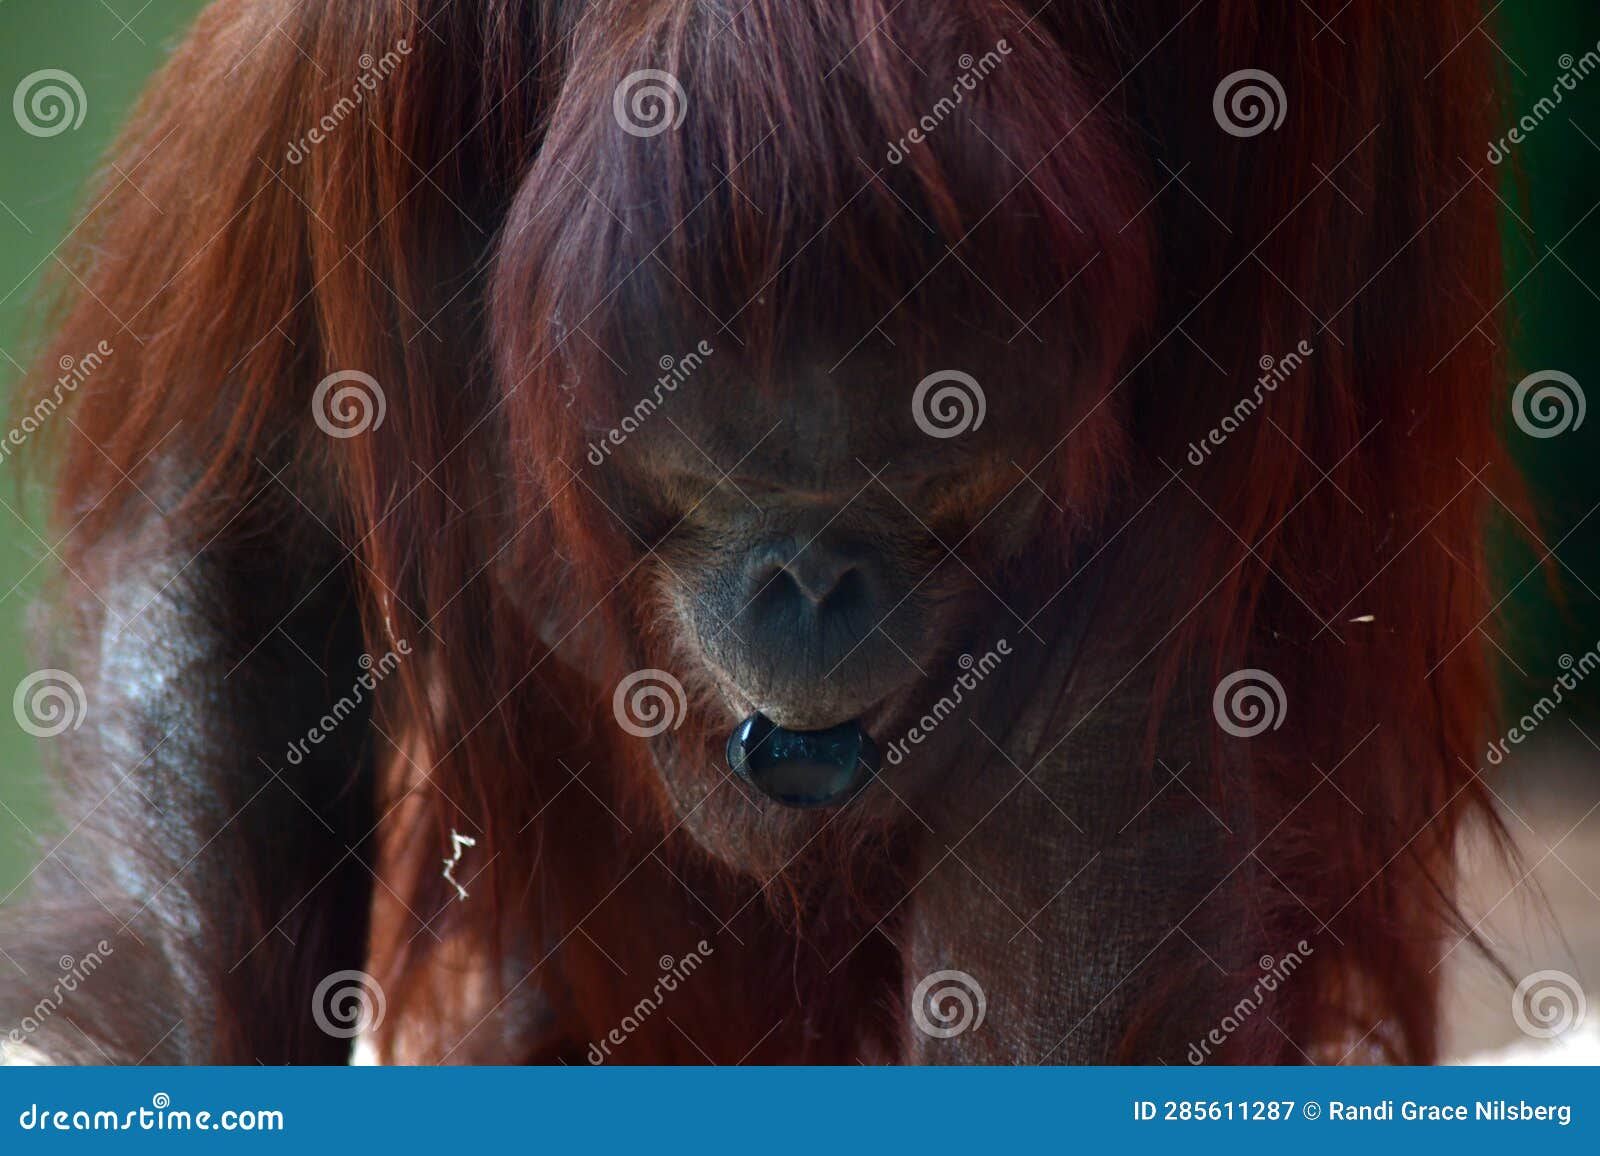 orangutan chewing on plastic